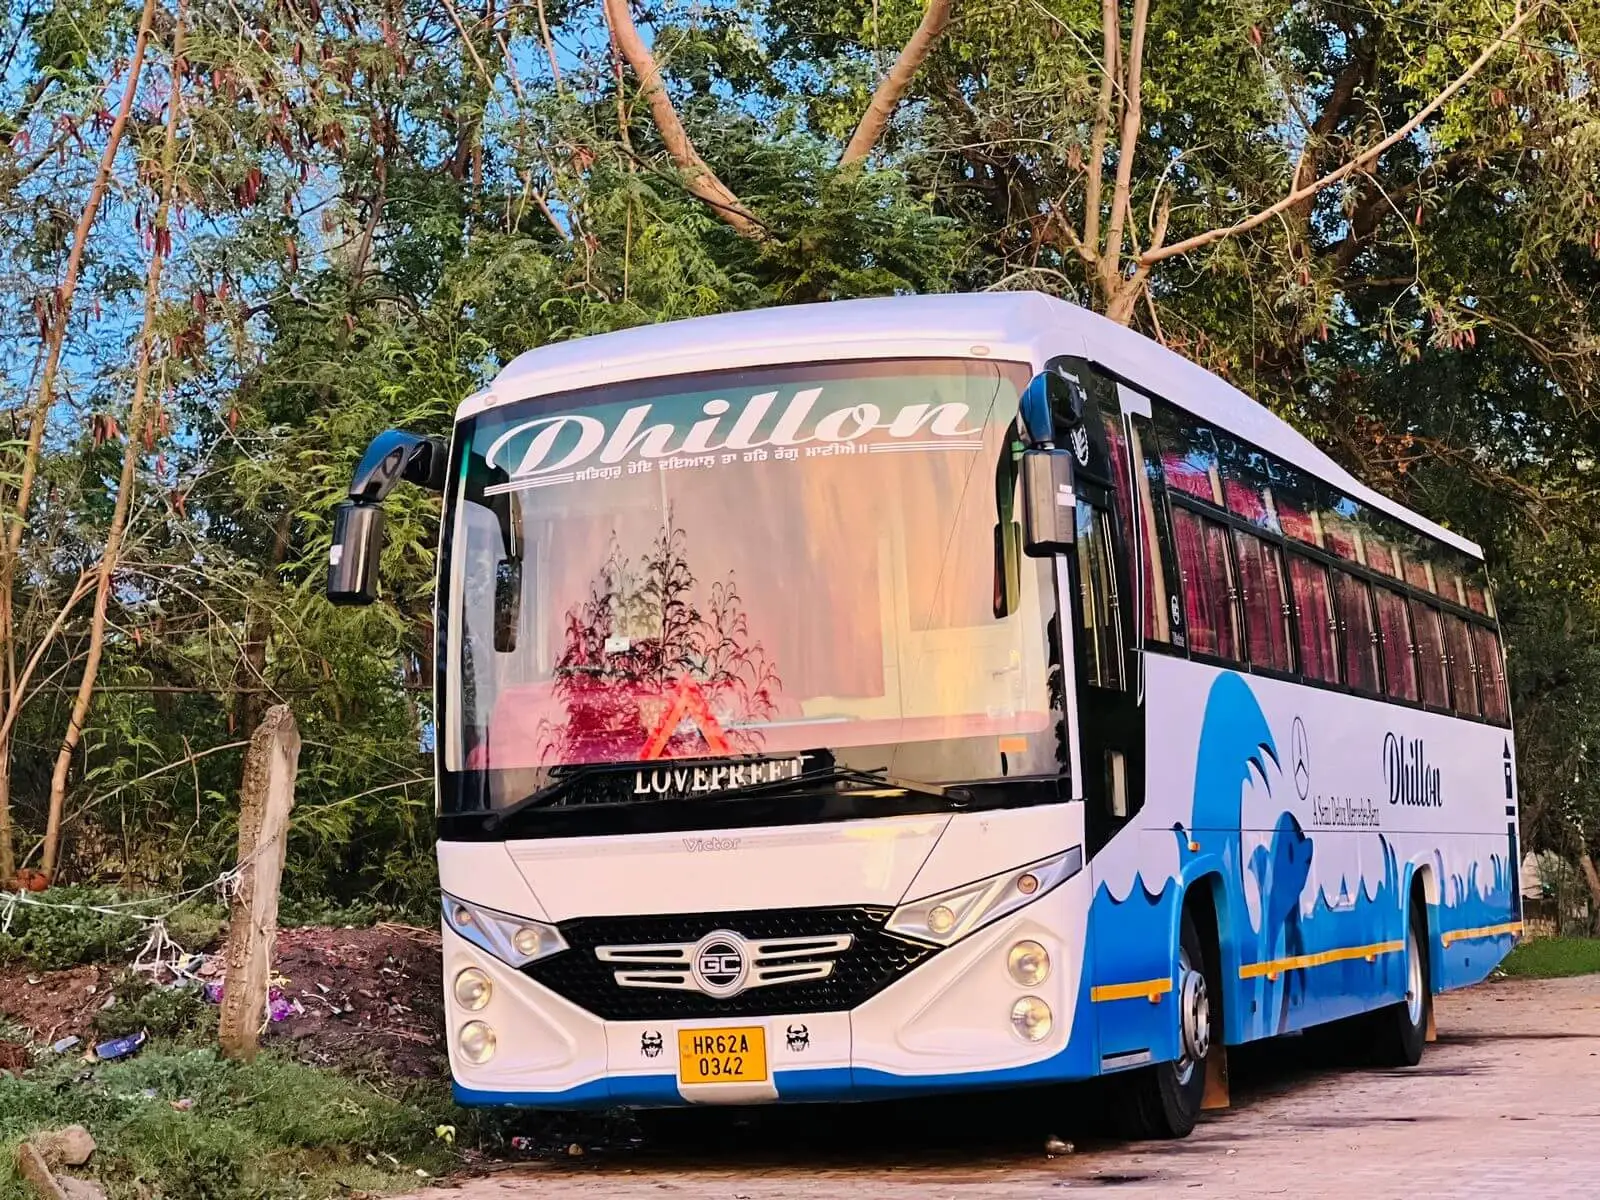 Dhillon Bus